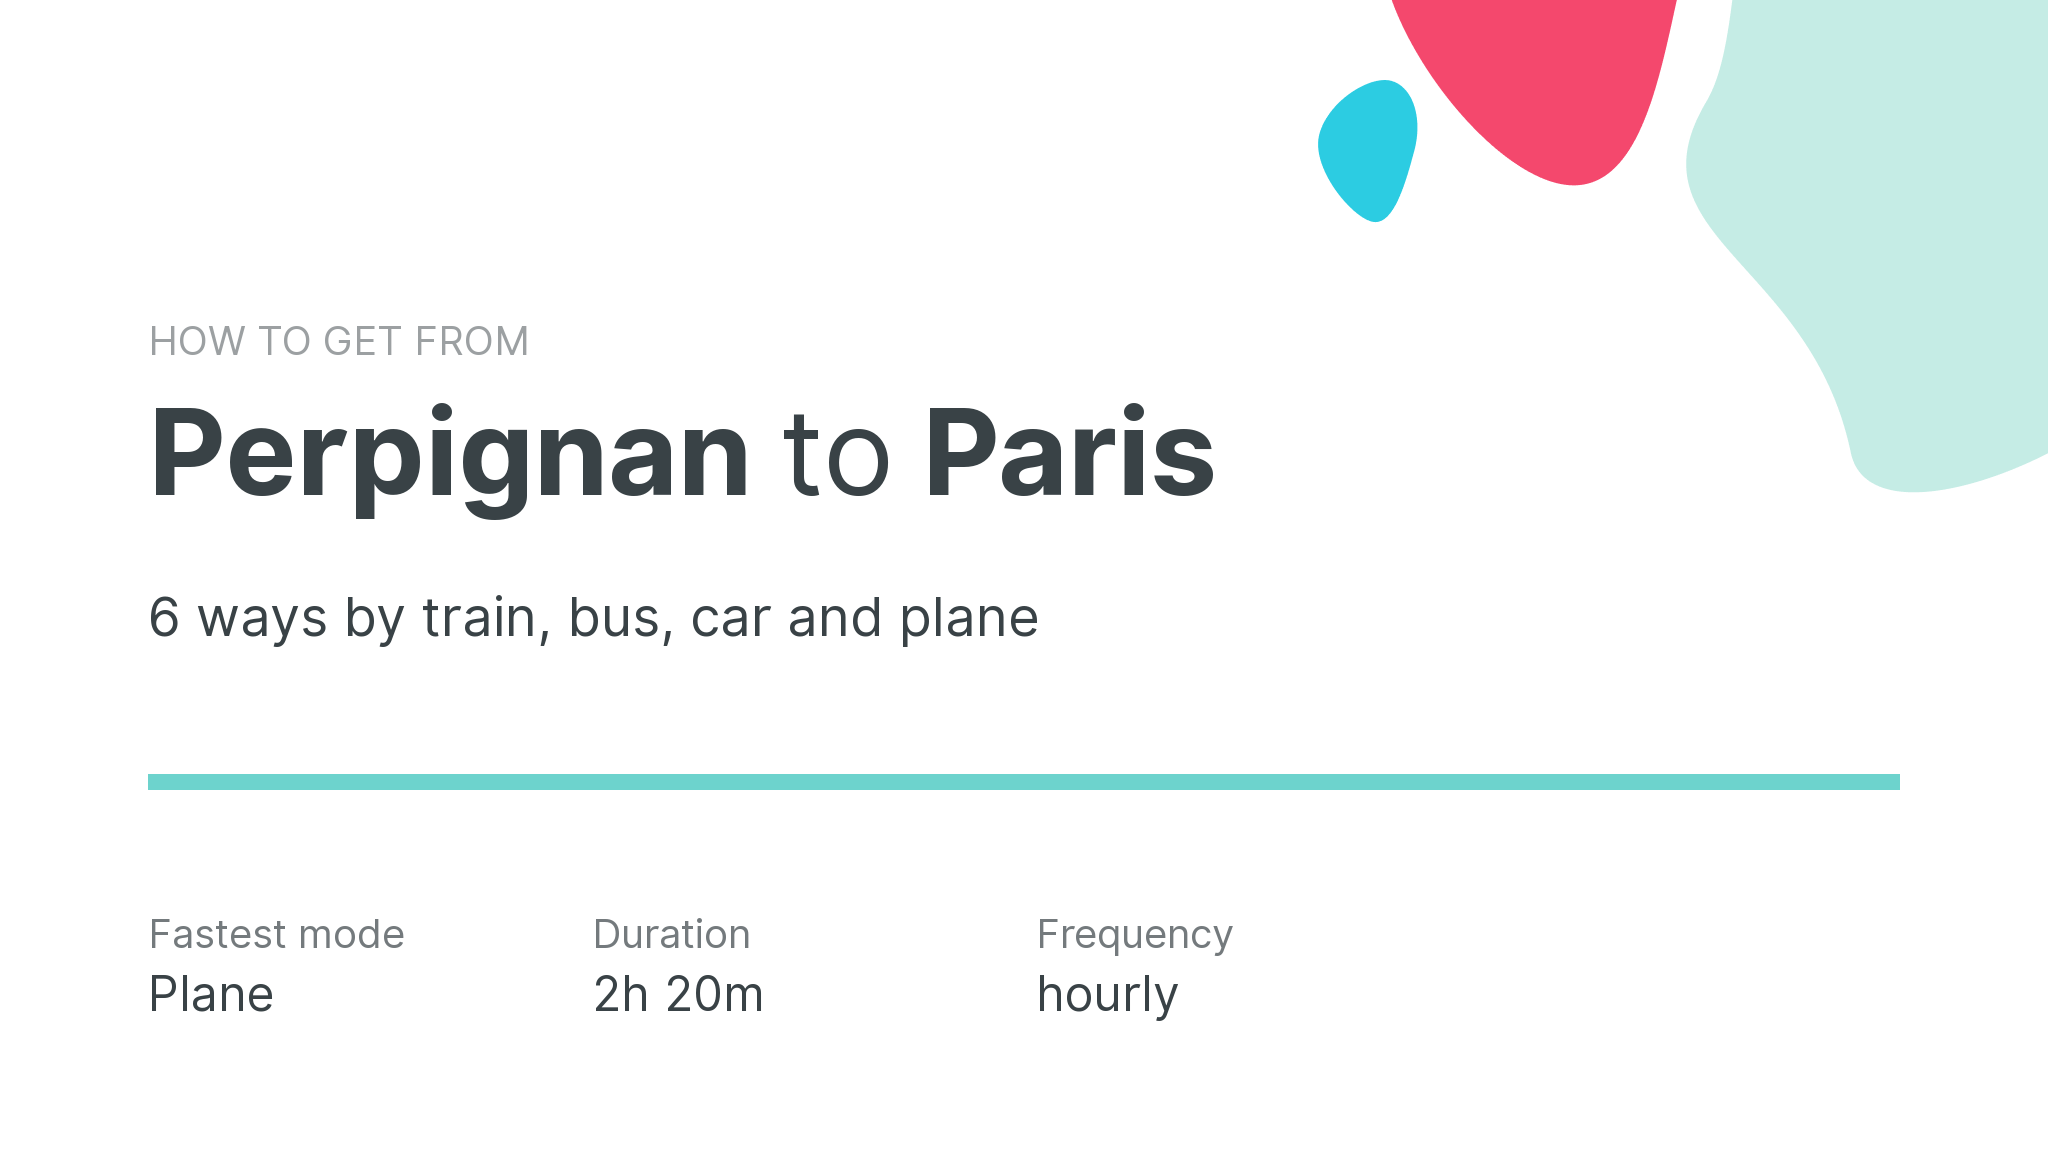 How do I get from Perpignan to Paris